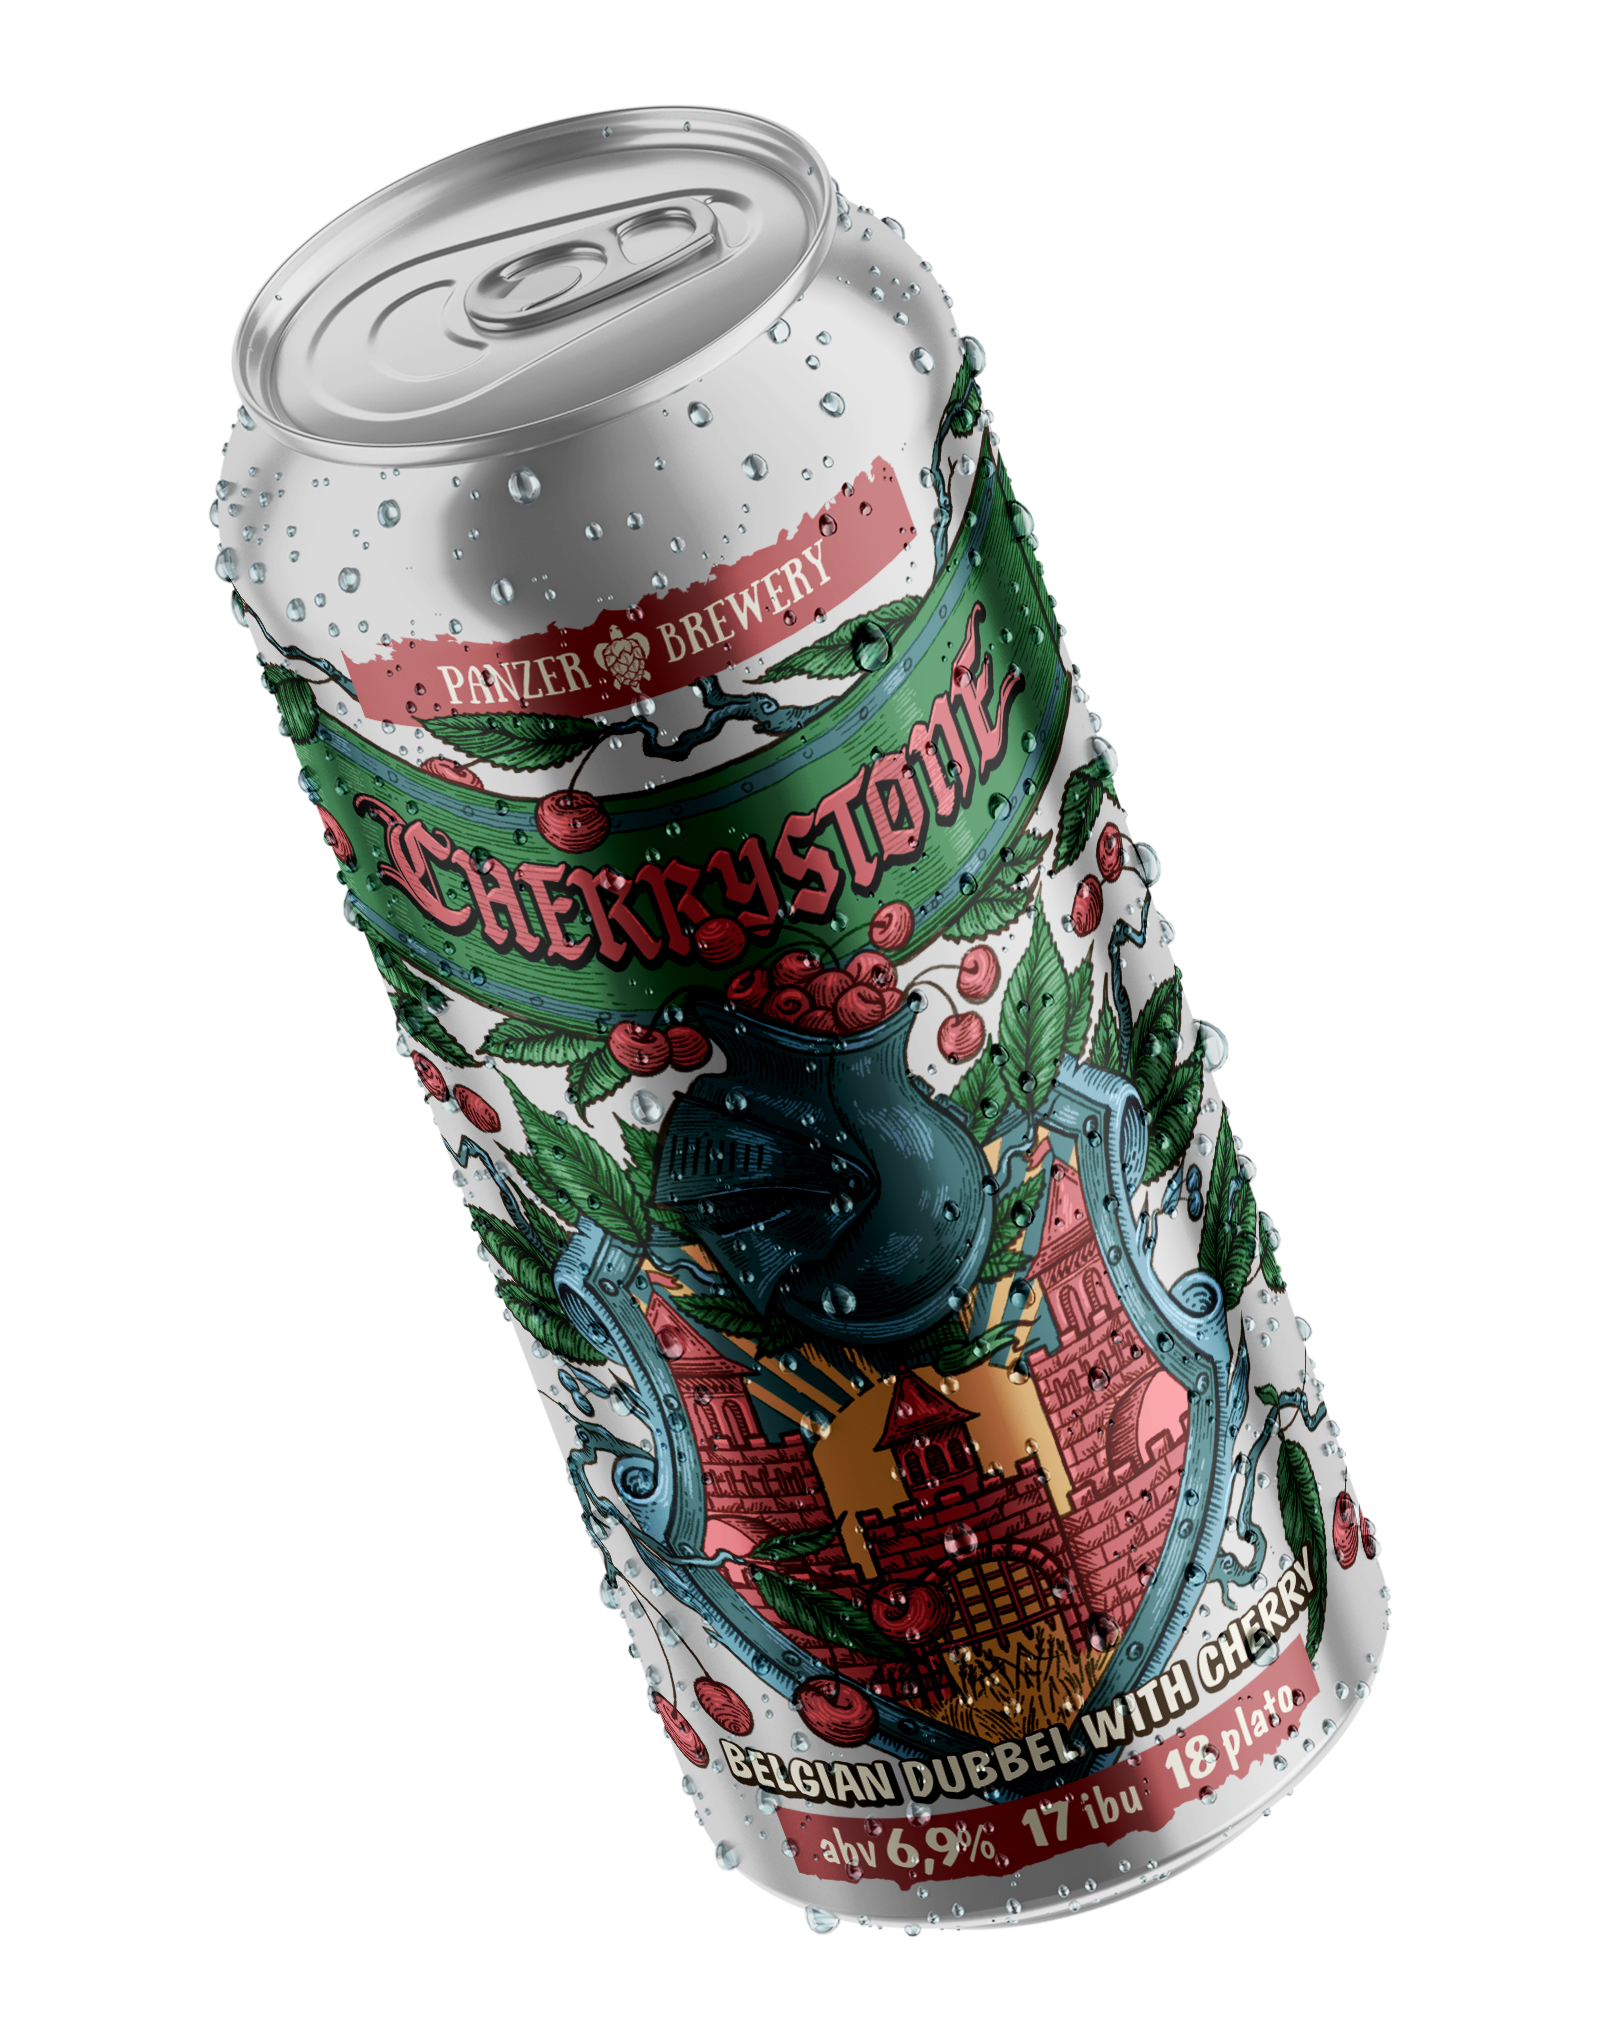 Банка пива Cherrystone - Fruit Beer от Panzer Brewery